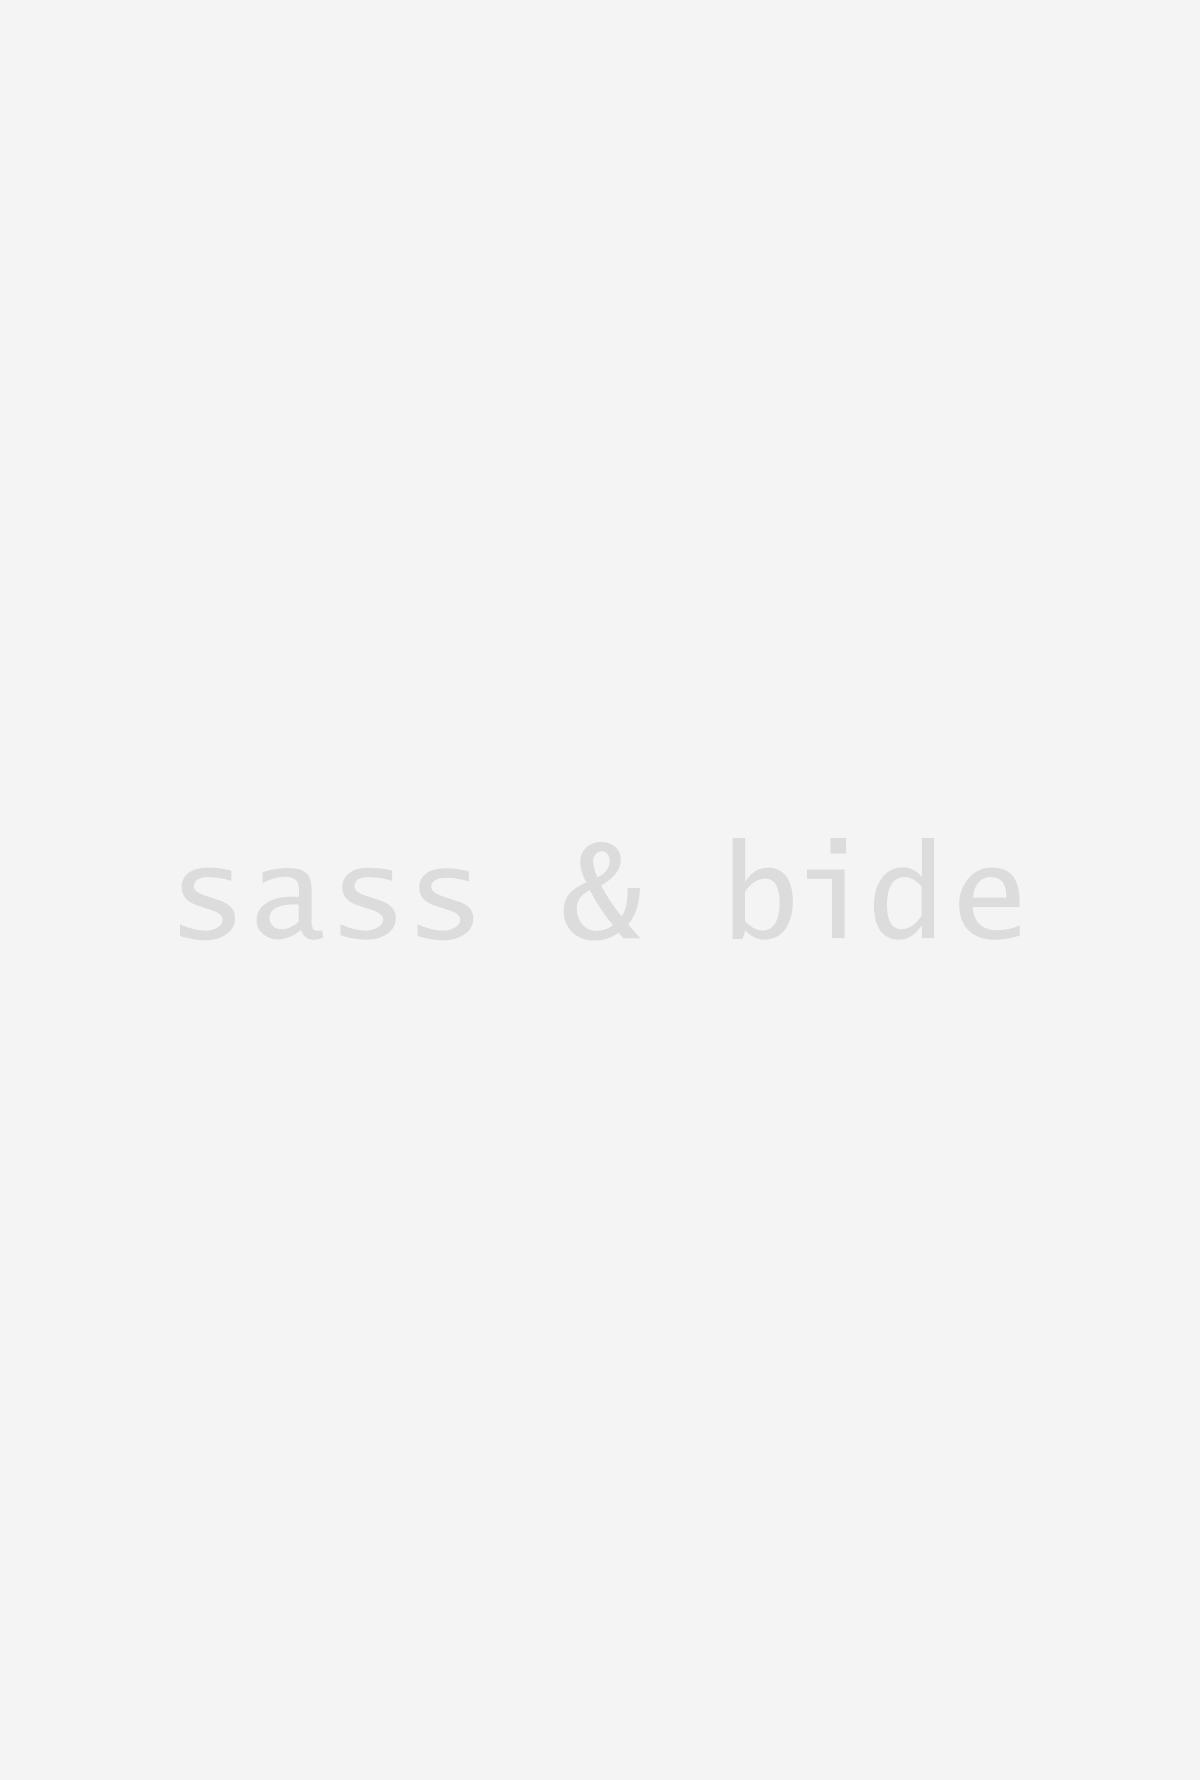 sass & bide | Australian Designer Clothes for Women | Official Store